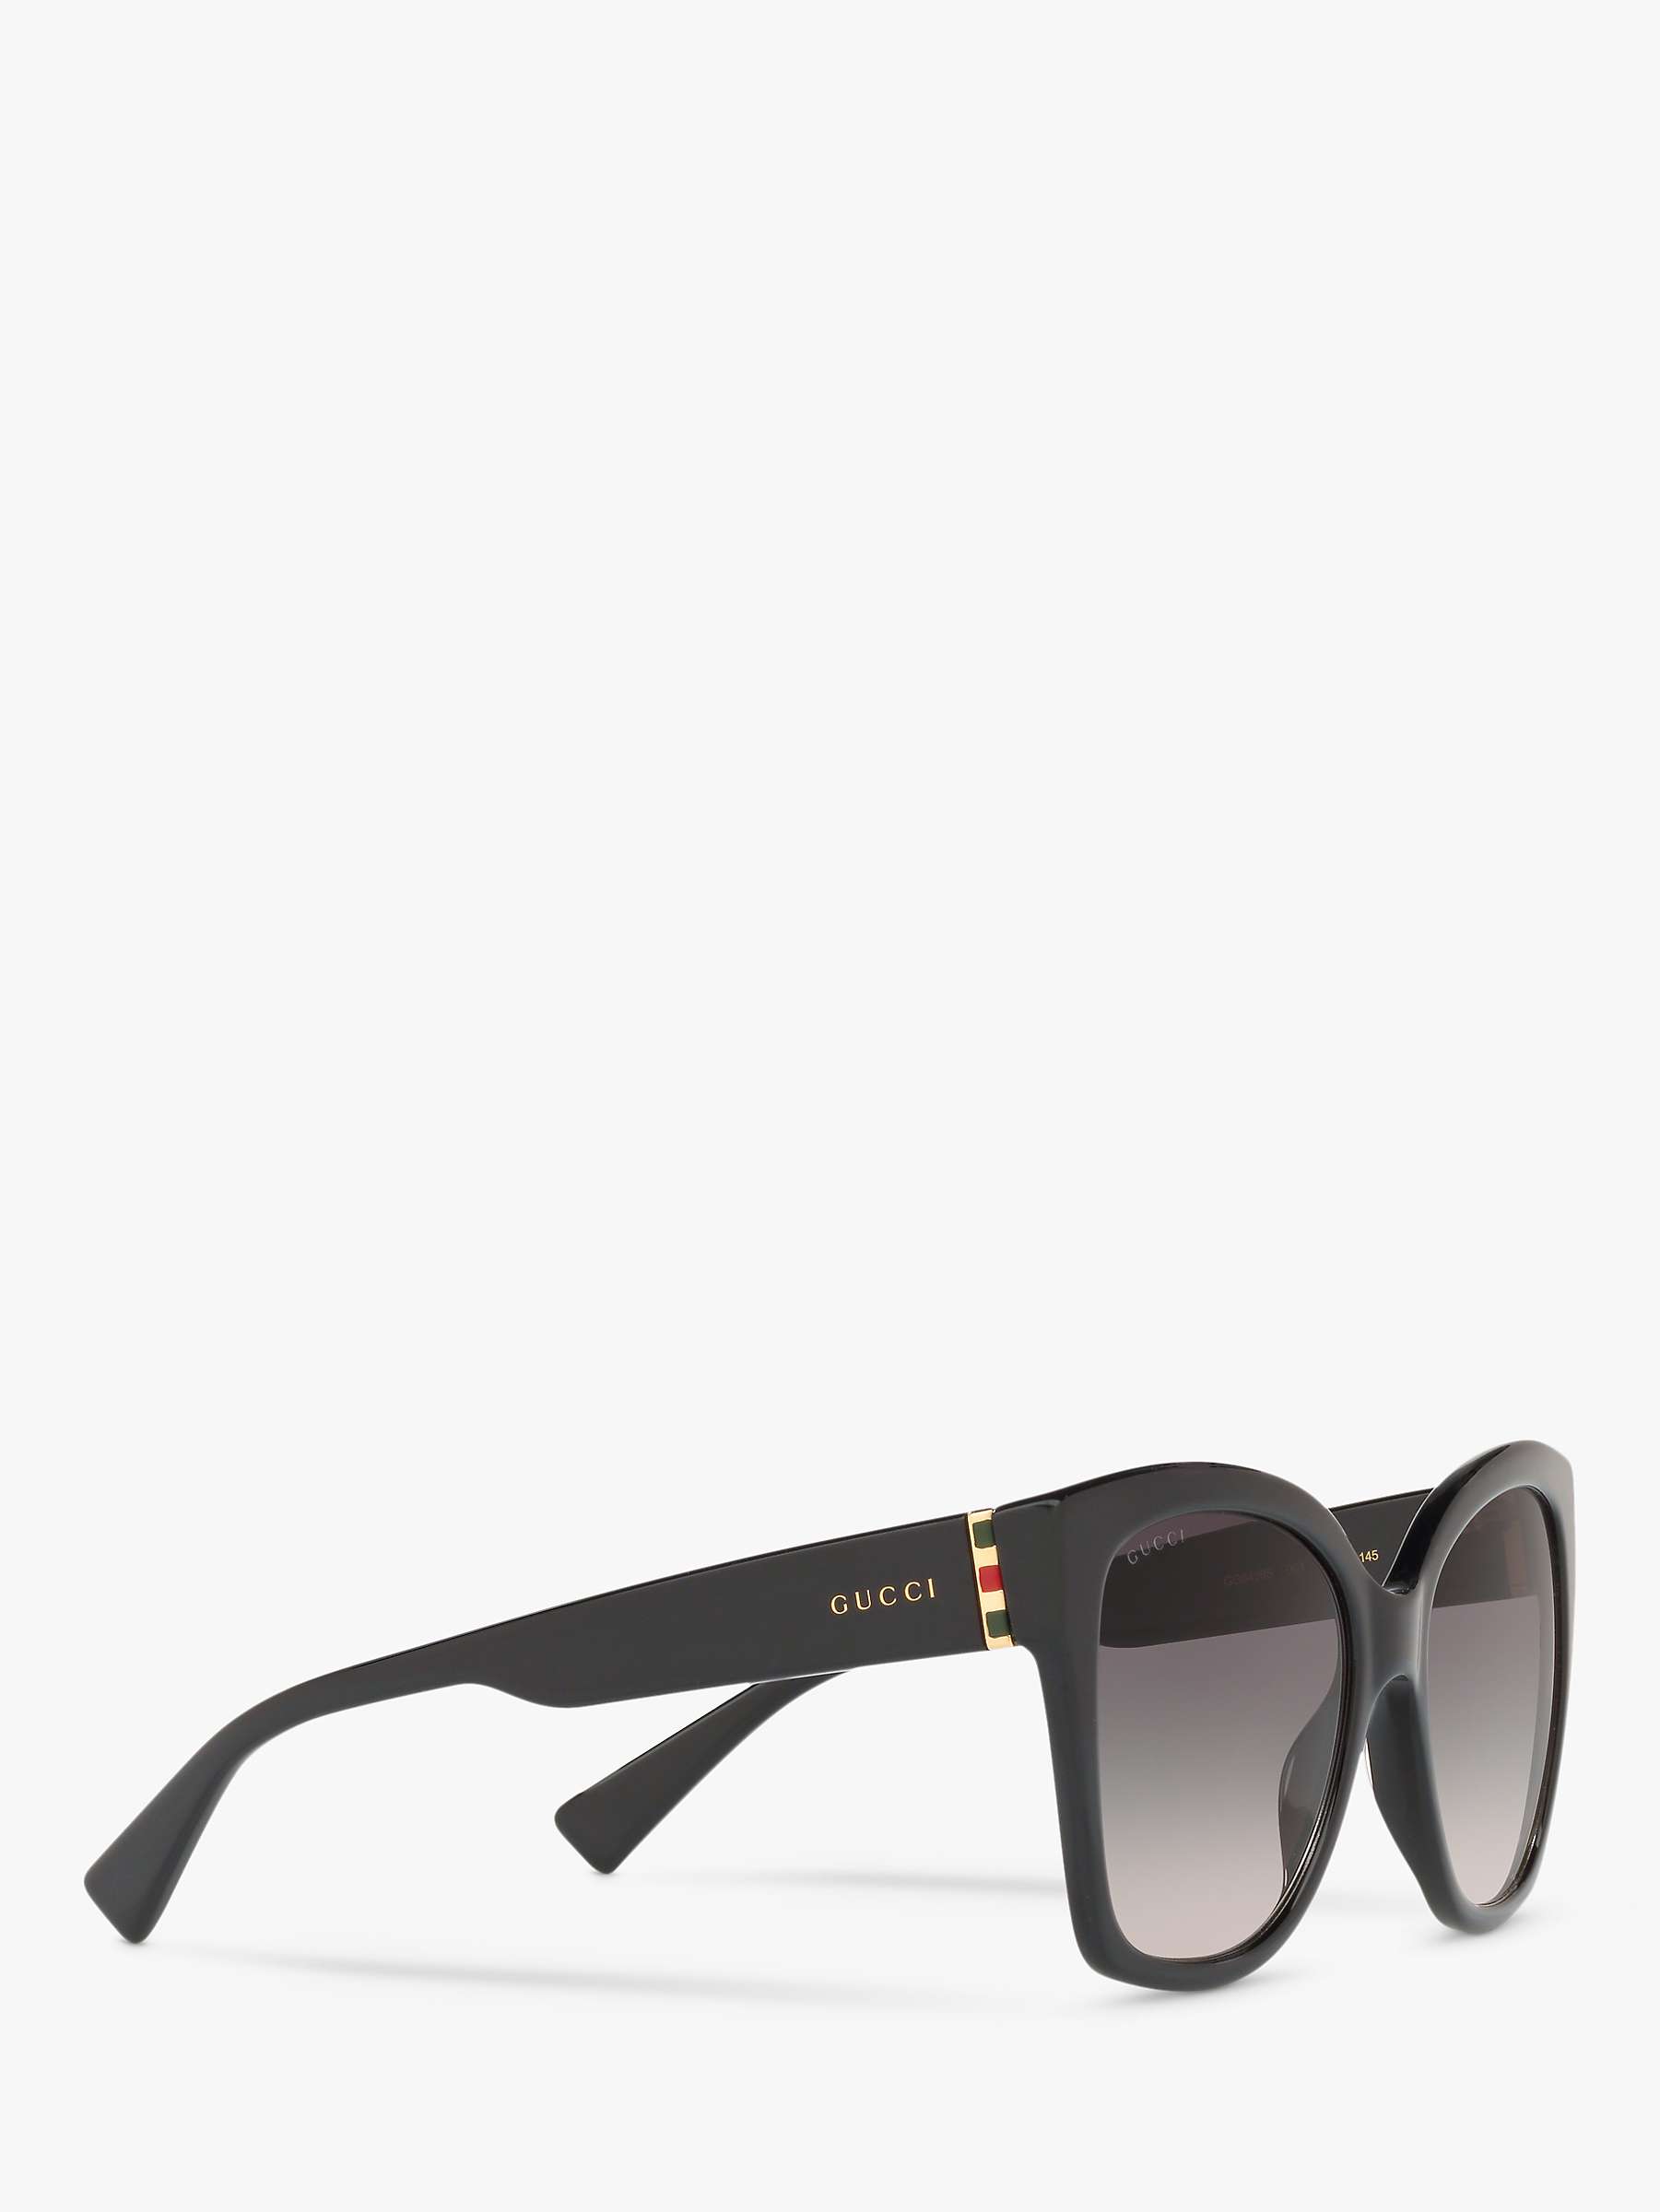 Gucci GG0459S Women's Square Sunglasses, Black at John Lewis & Partners